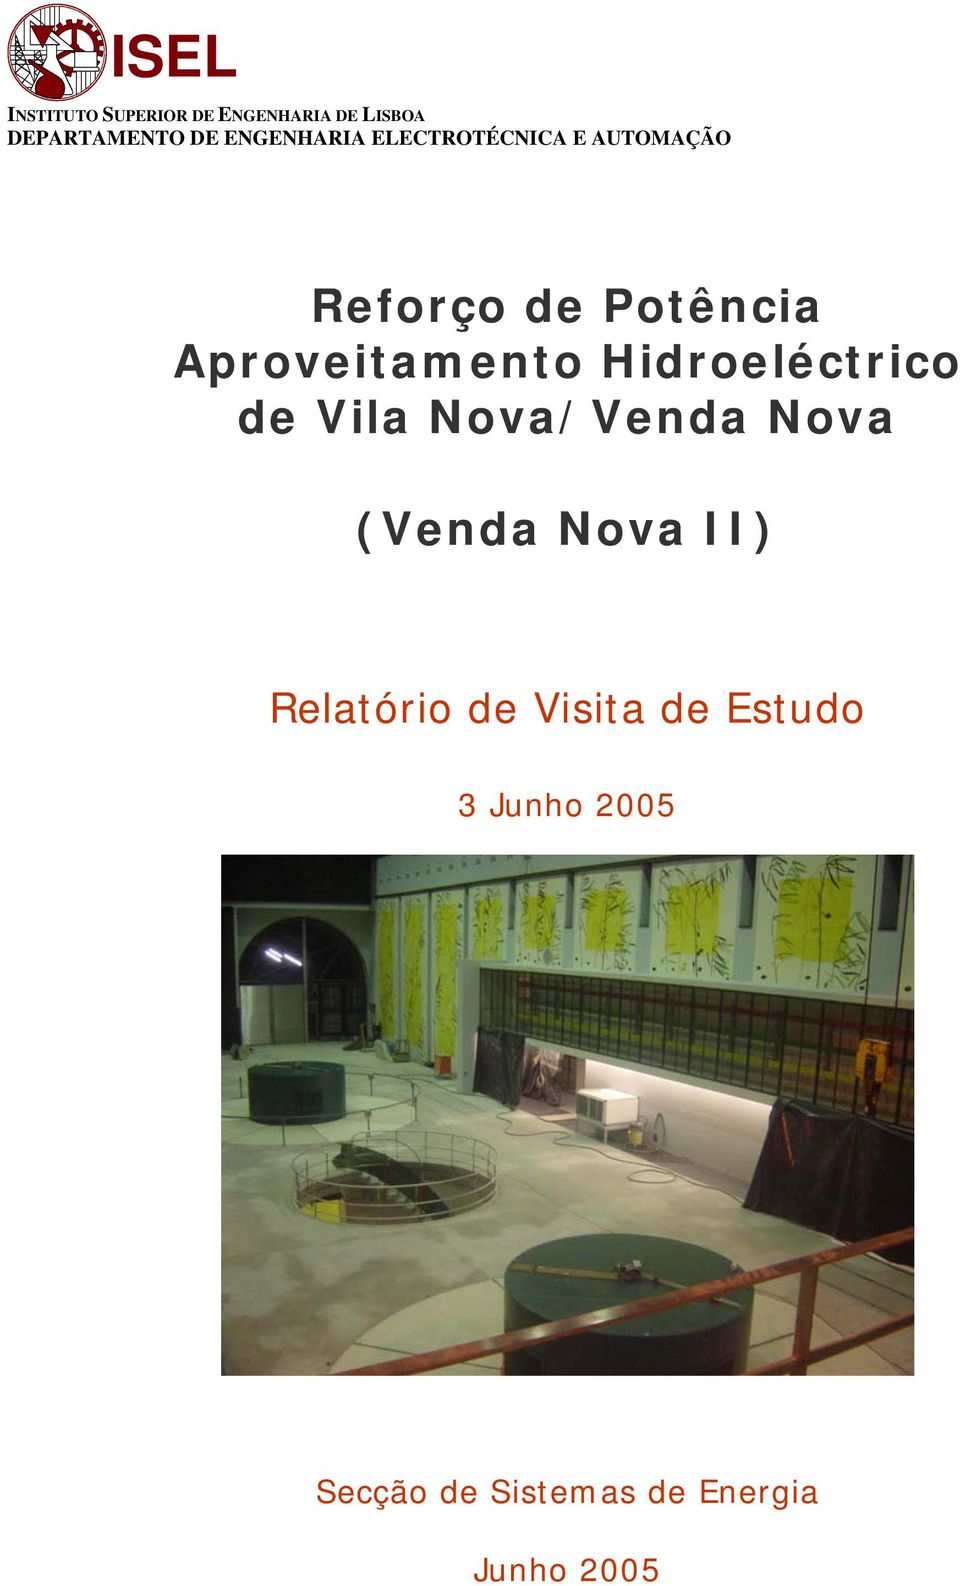 Aproveitamento Hidroeléctrico de Vila Nova/Venda Nova (Venda Nova